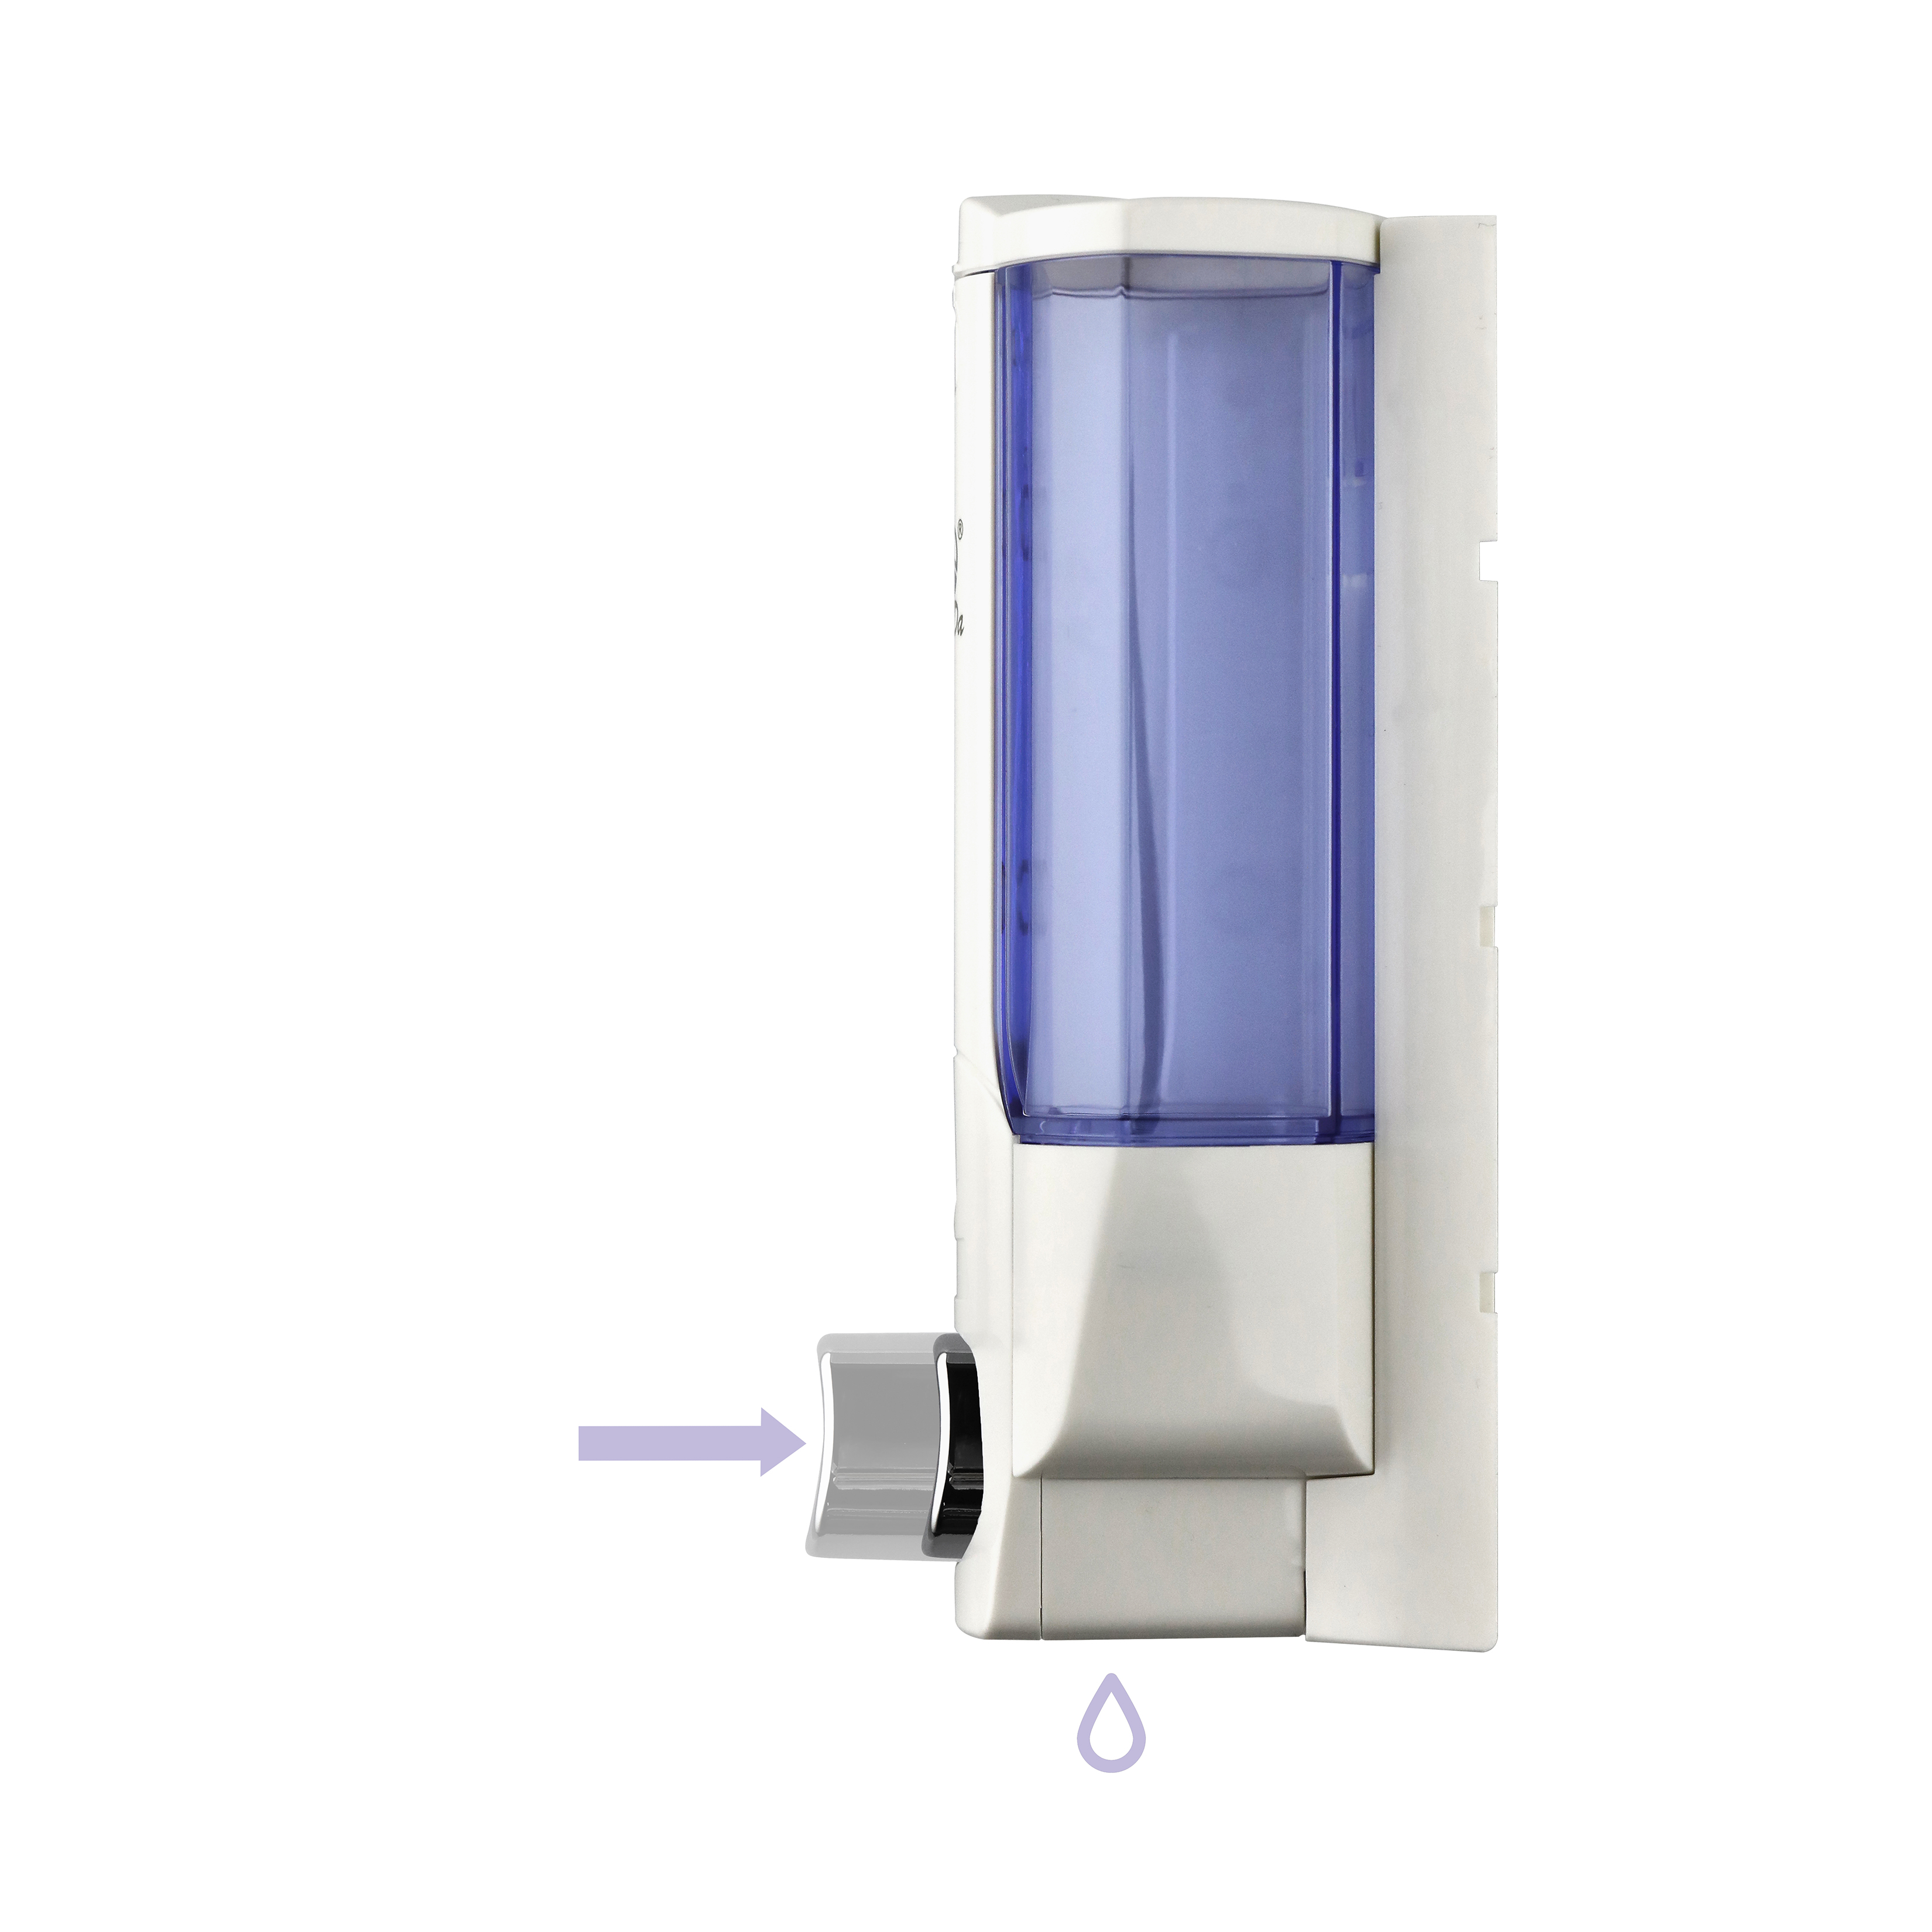 XINDA Wall Mounted Manual Hand Soap Dispenser ZYQ138 